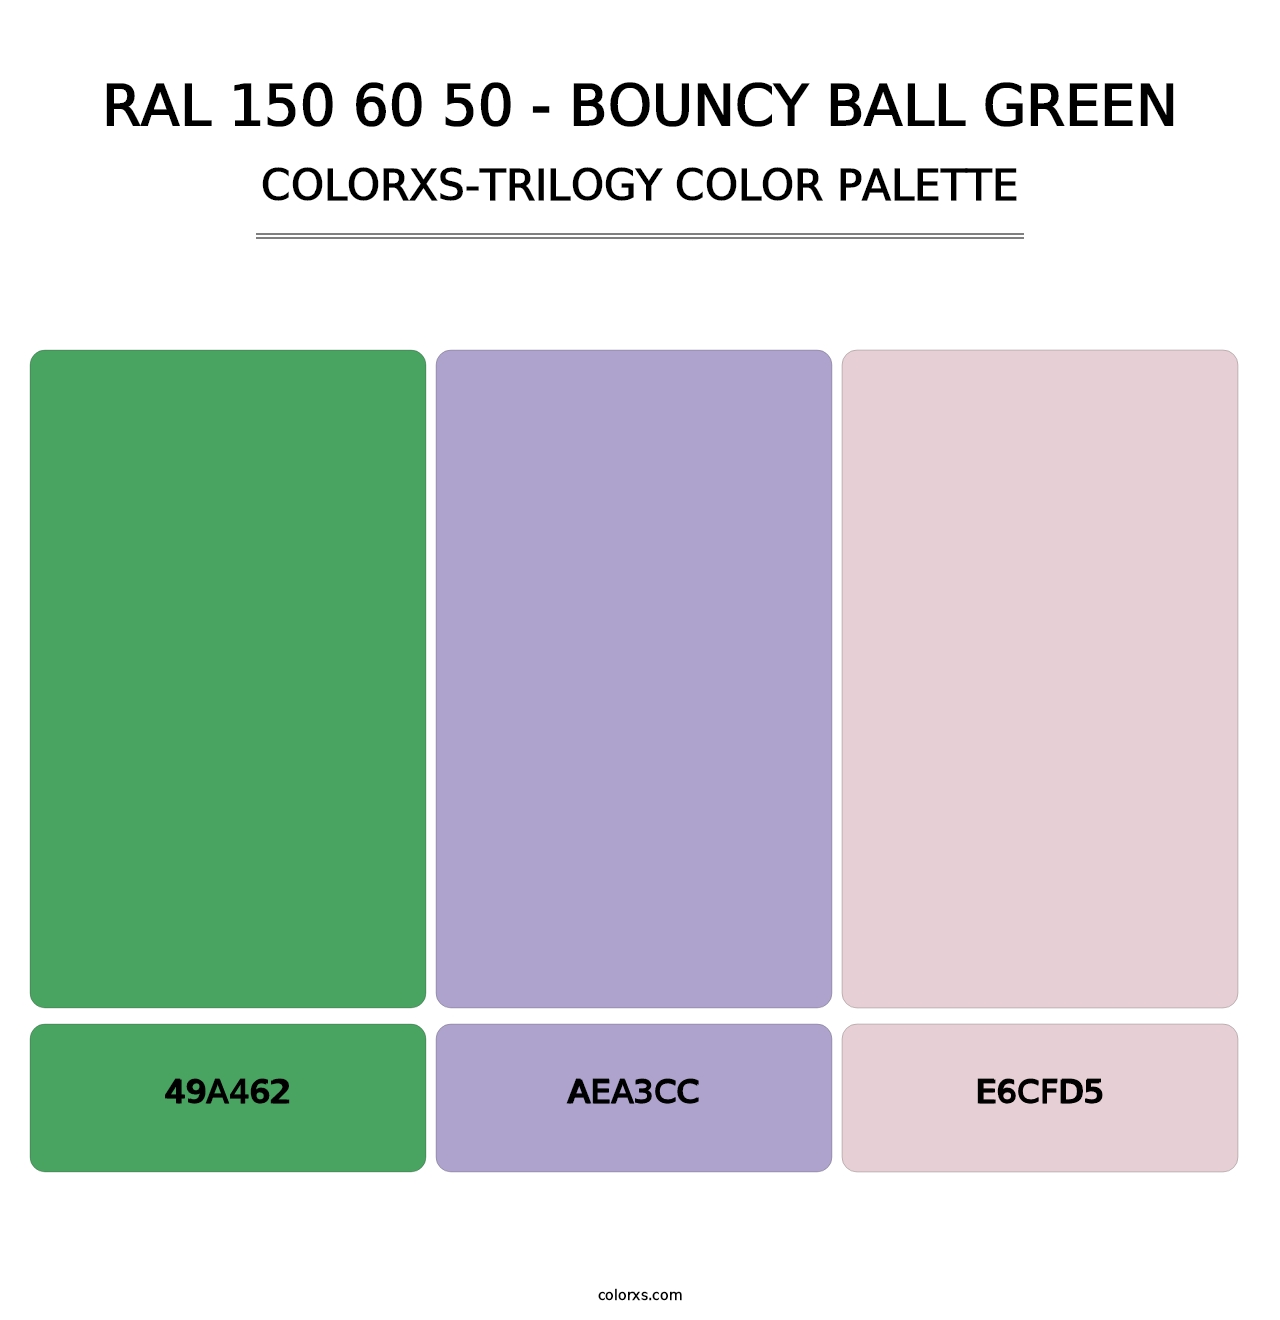 RAL 150 60 50 - Bouncy Ball Green - Colorxs Trilogy Palette